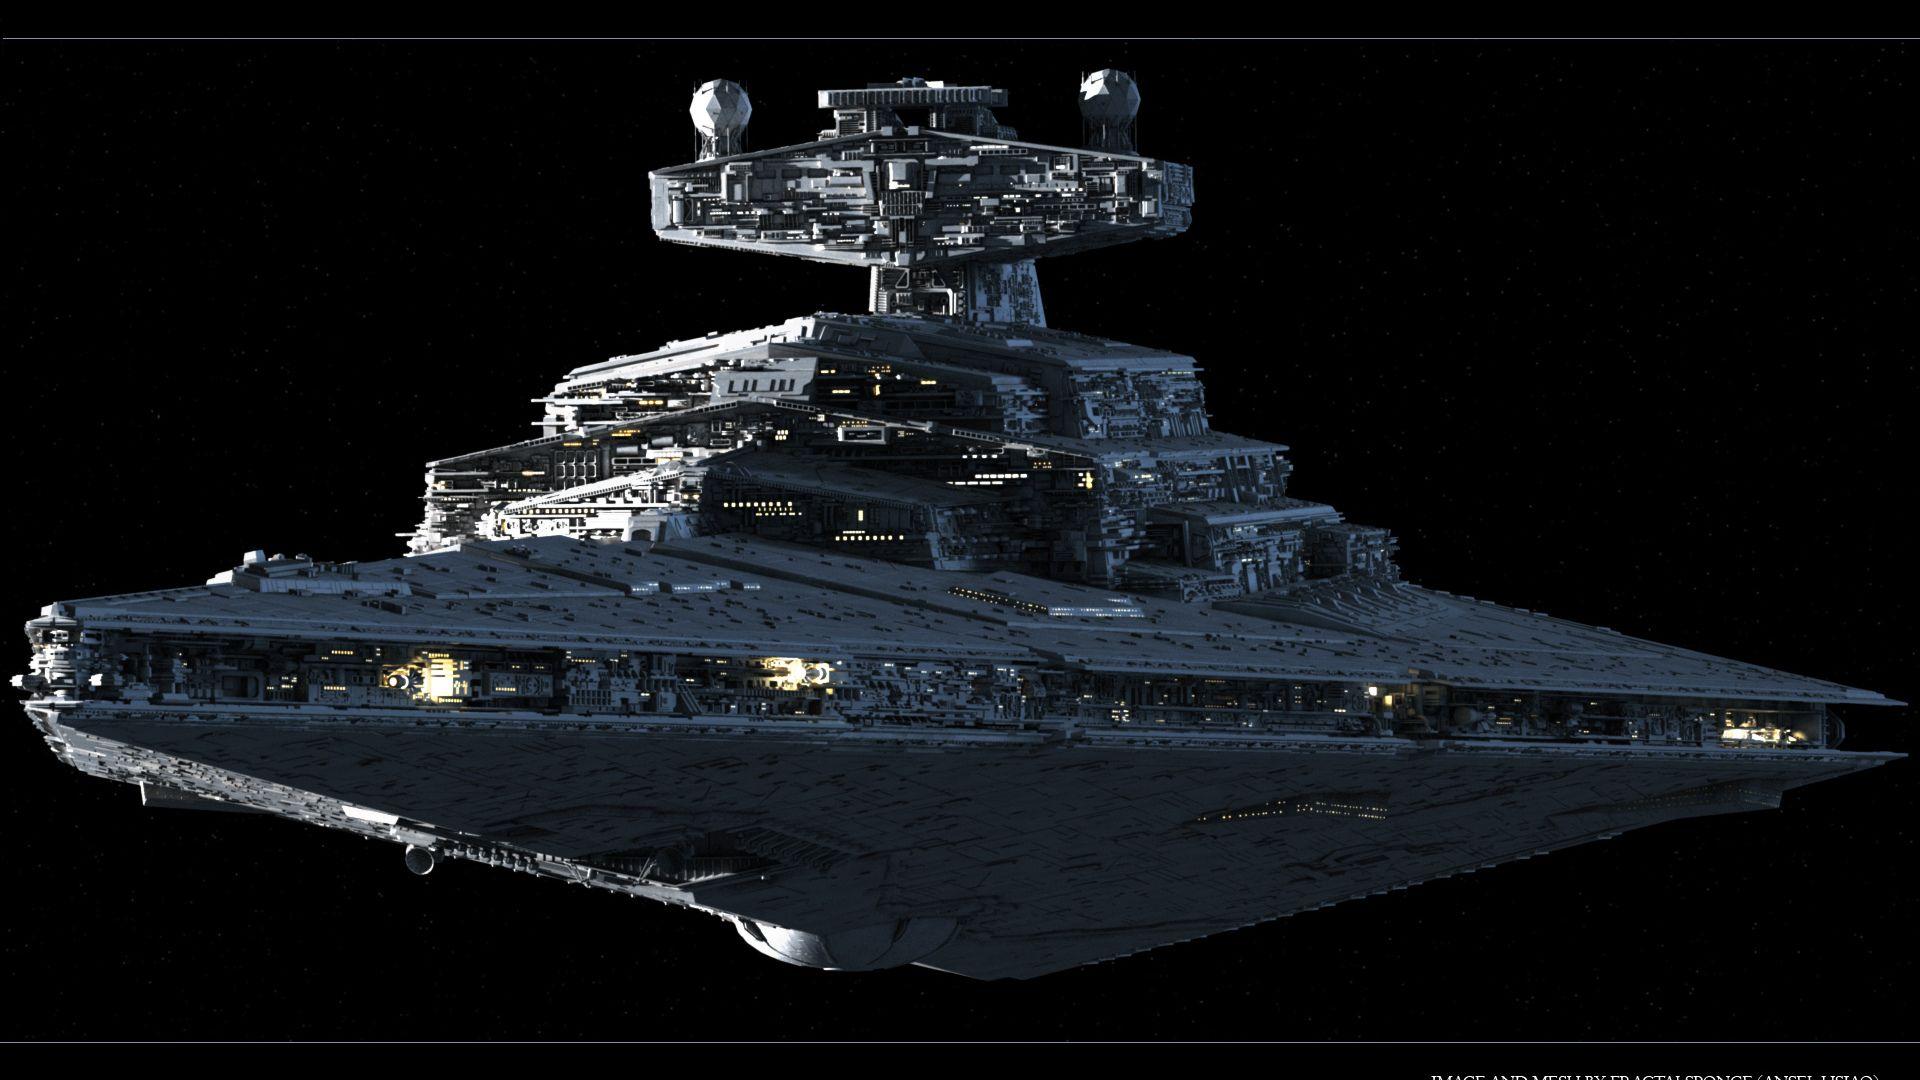 Spaceship Wallpaper. Star wars .com